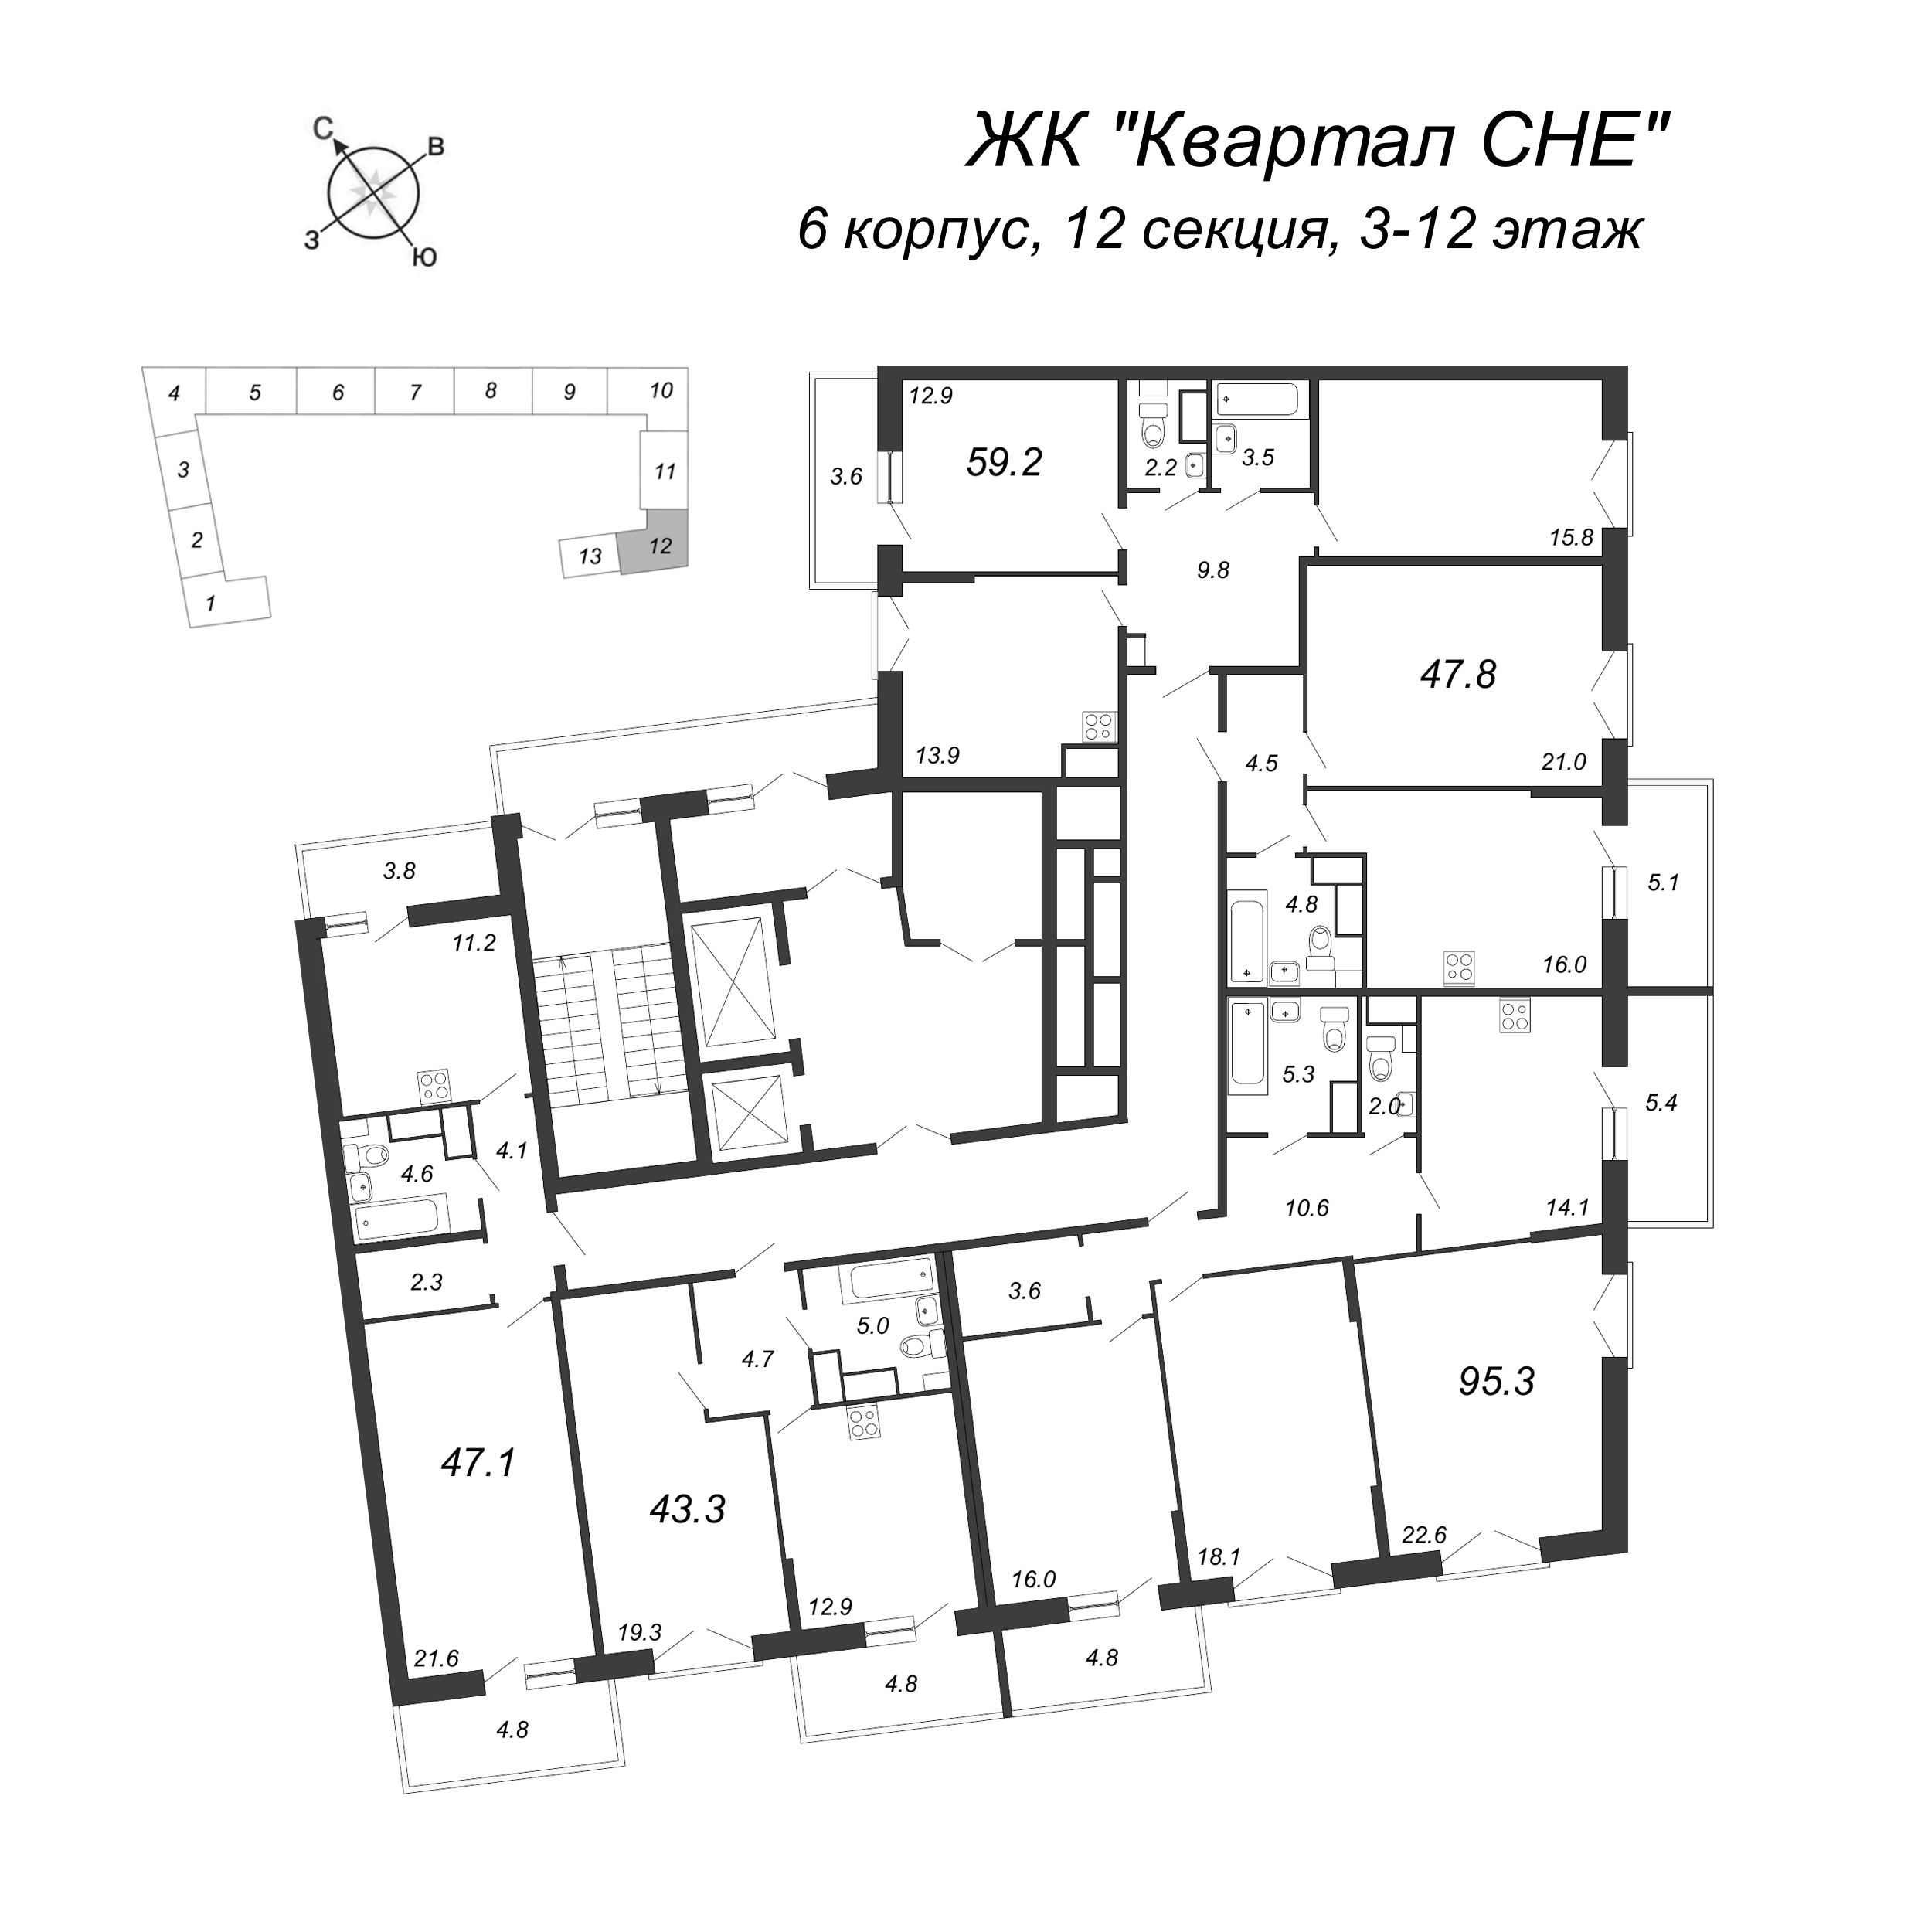 3-комнатная квартира, 97 м² в ЖК "Квартал Che" - планировка этажа